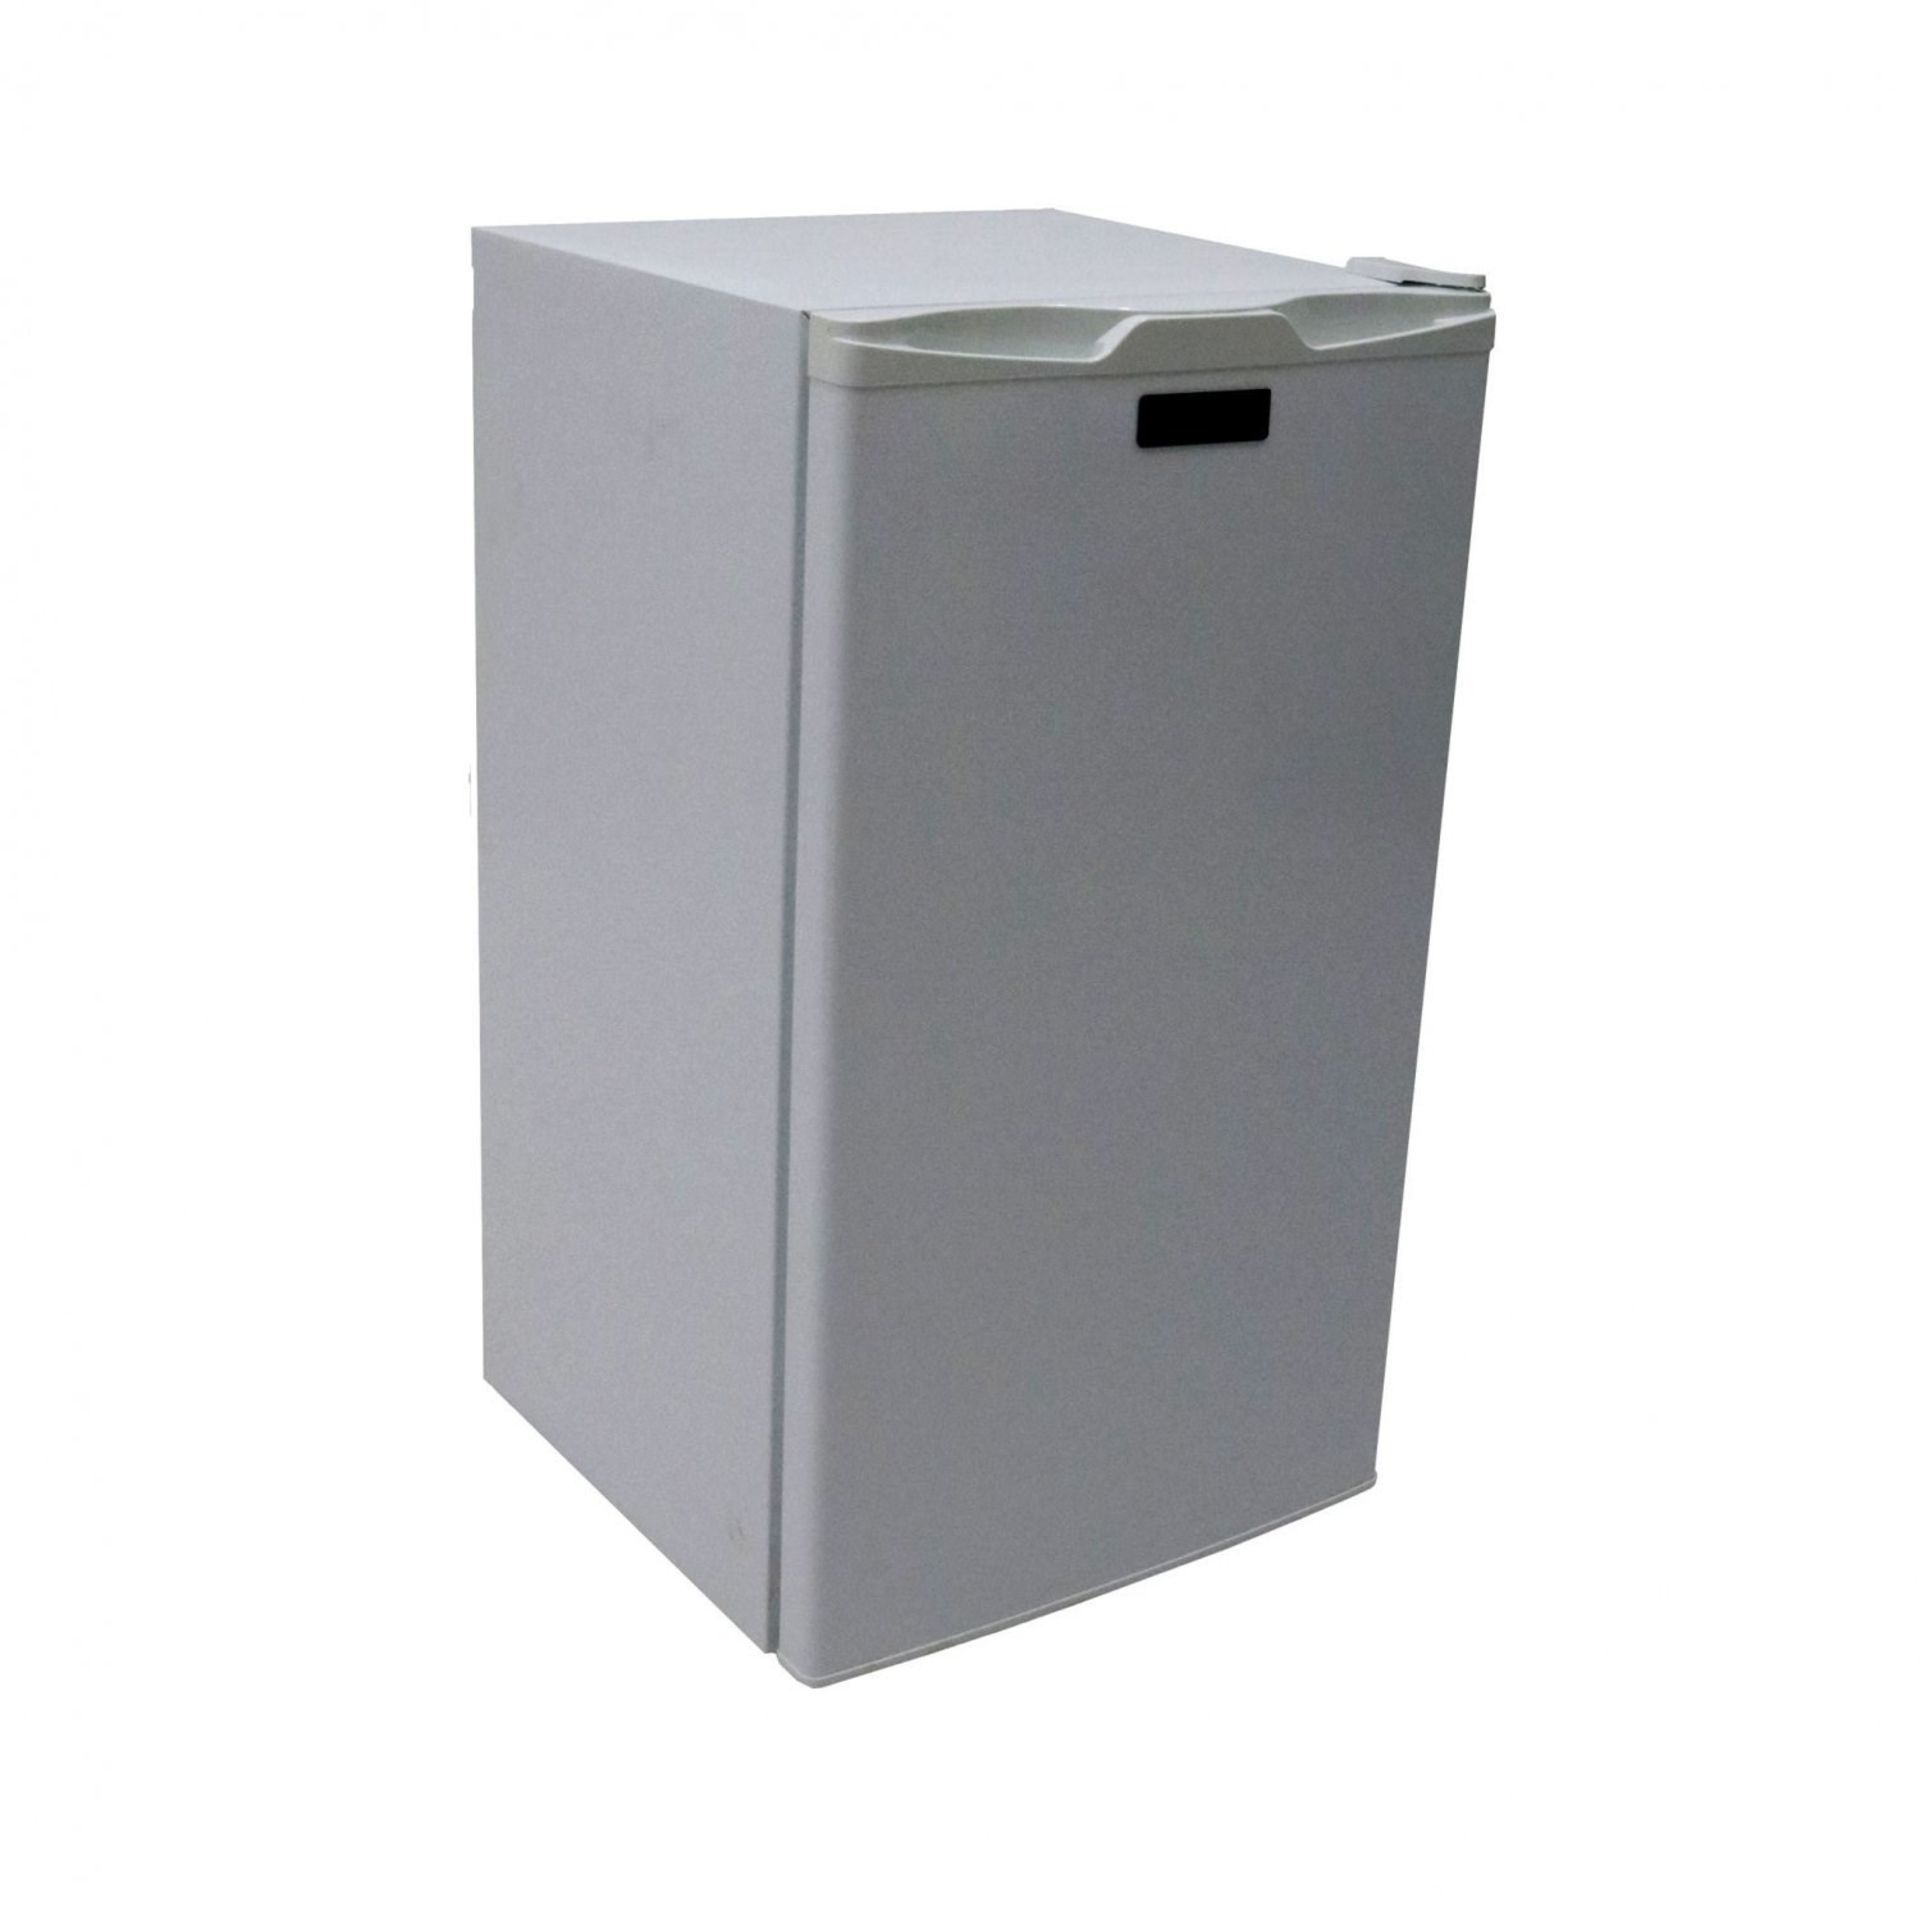 90L Undercounter Fridge. The under counter 90L fridge offers a space saving compact design wit...